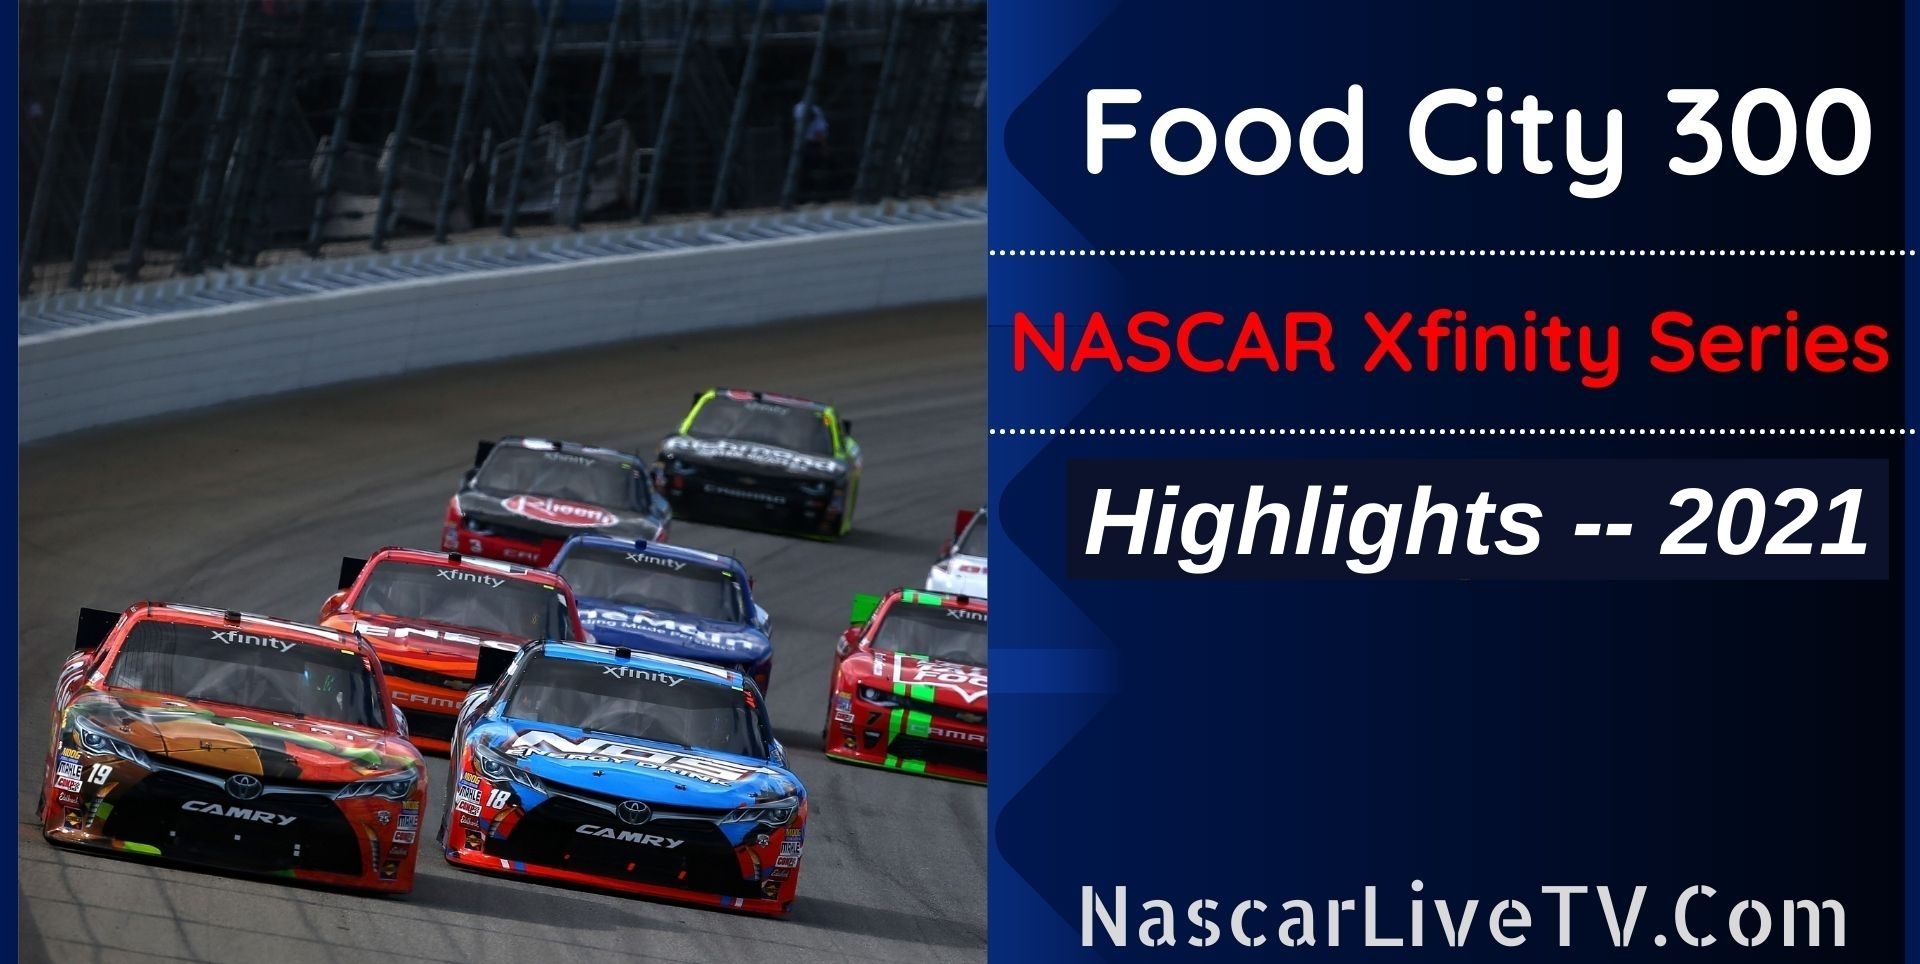 Food City 300 Highlights NASCAR Xfinity Series 2021